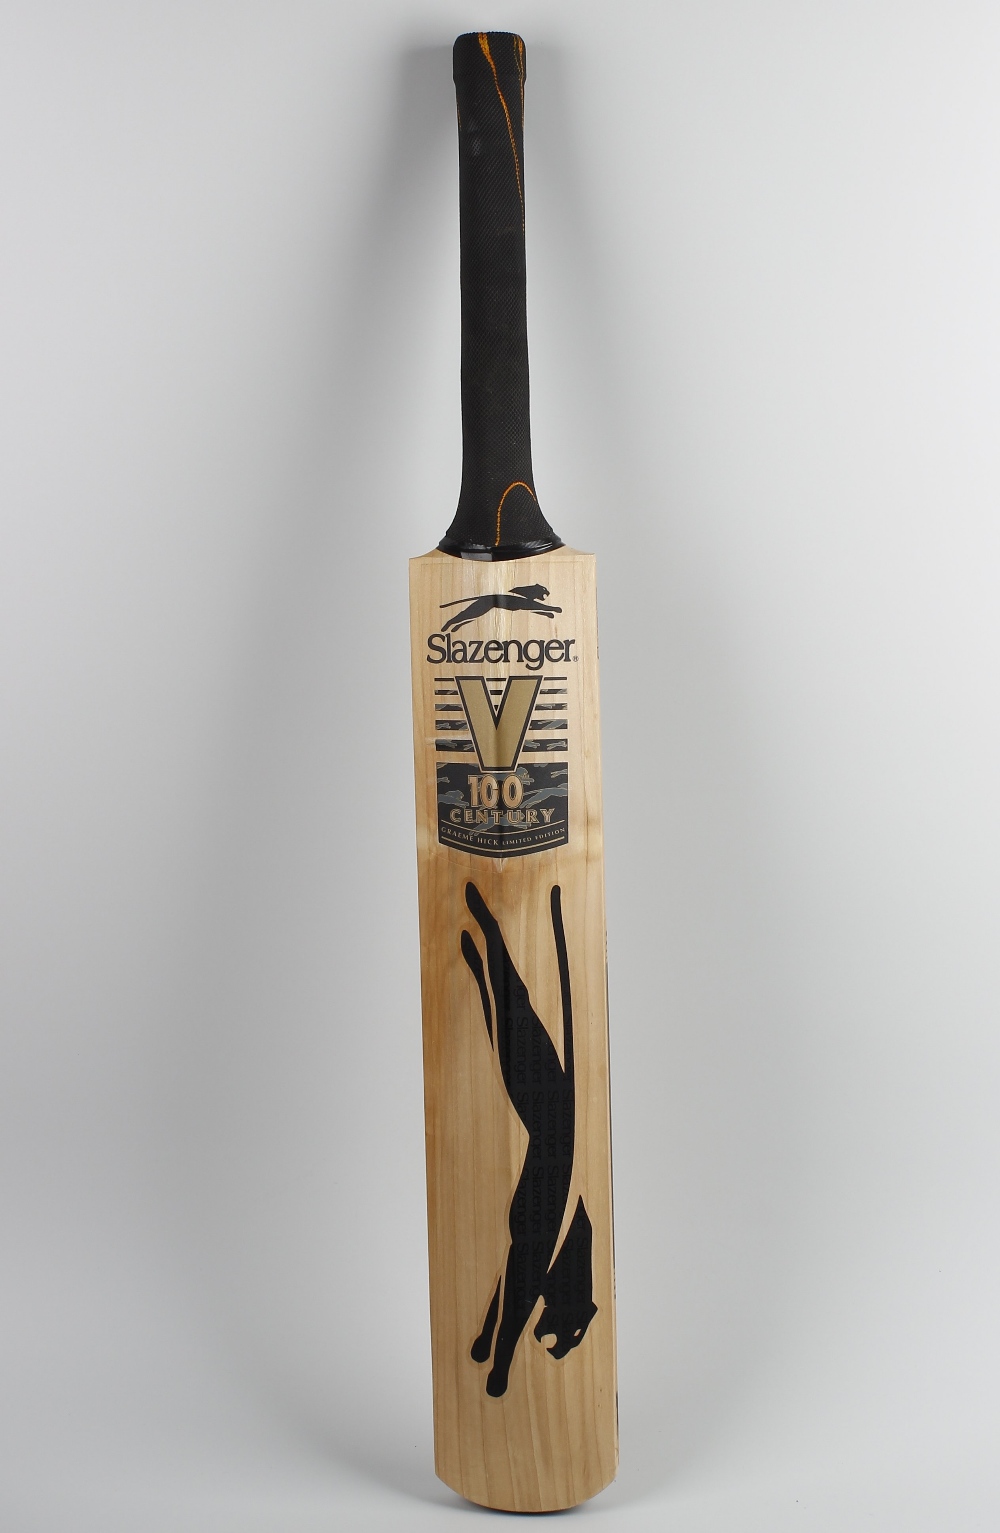 A signed 1999 World Cup cricket bat The Slazenger V100 Century Graeme Hick Limited Edition bat, - Image 3 of 3